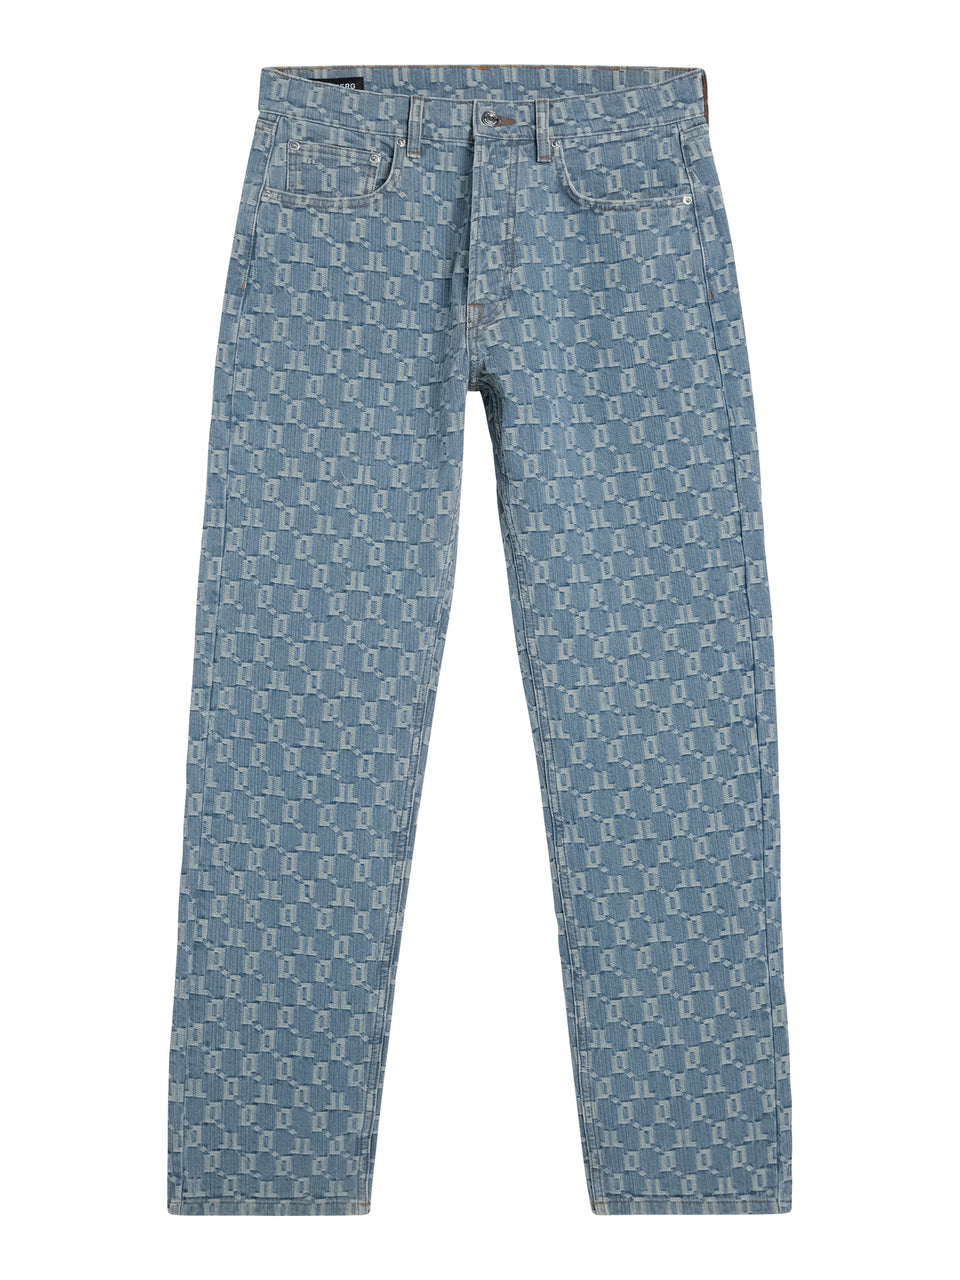 Louis Vuitton Monogram Wave Pajama Shorts Blue. Size 34